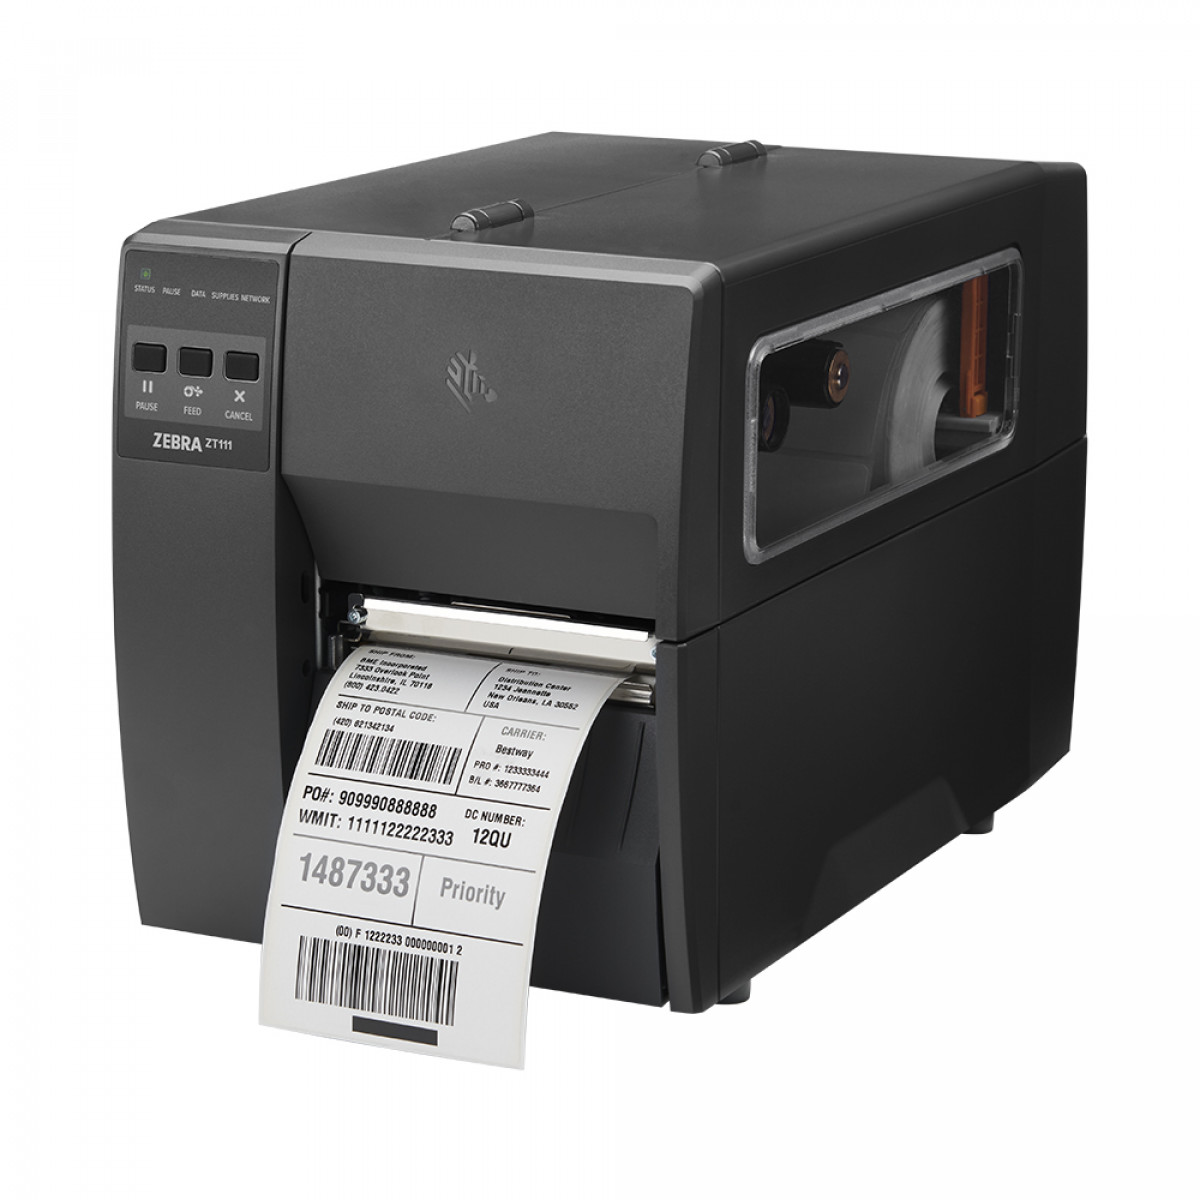 Zebra ZT111 space saving printer